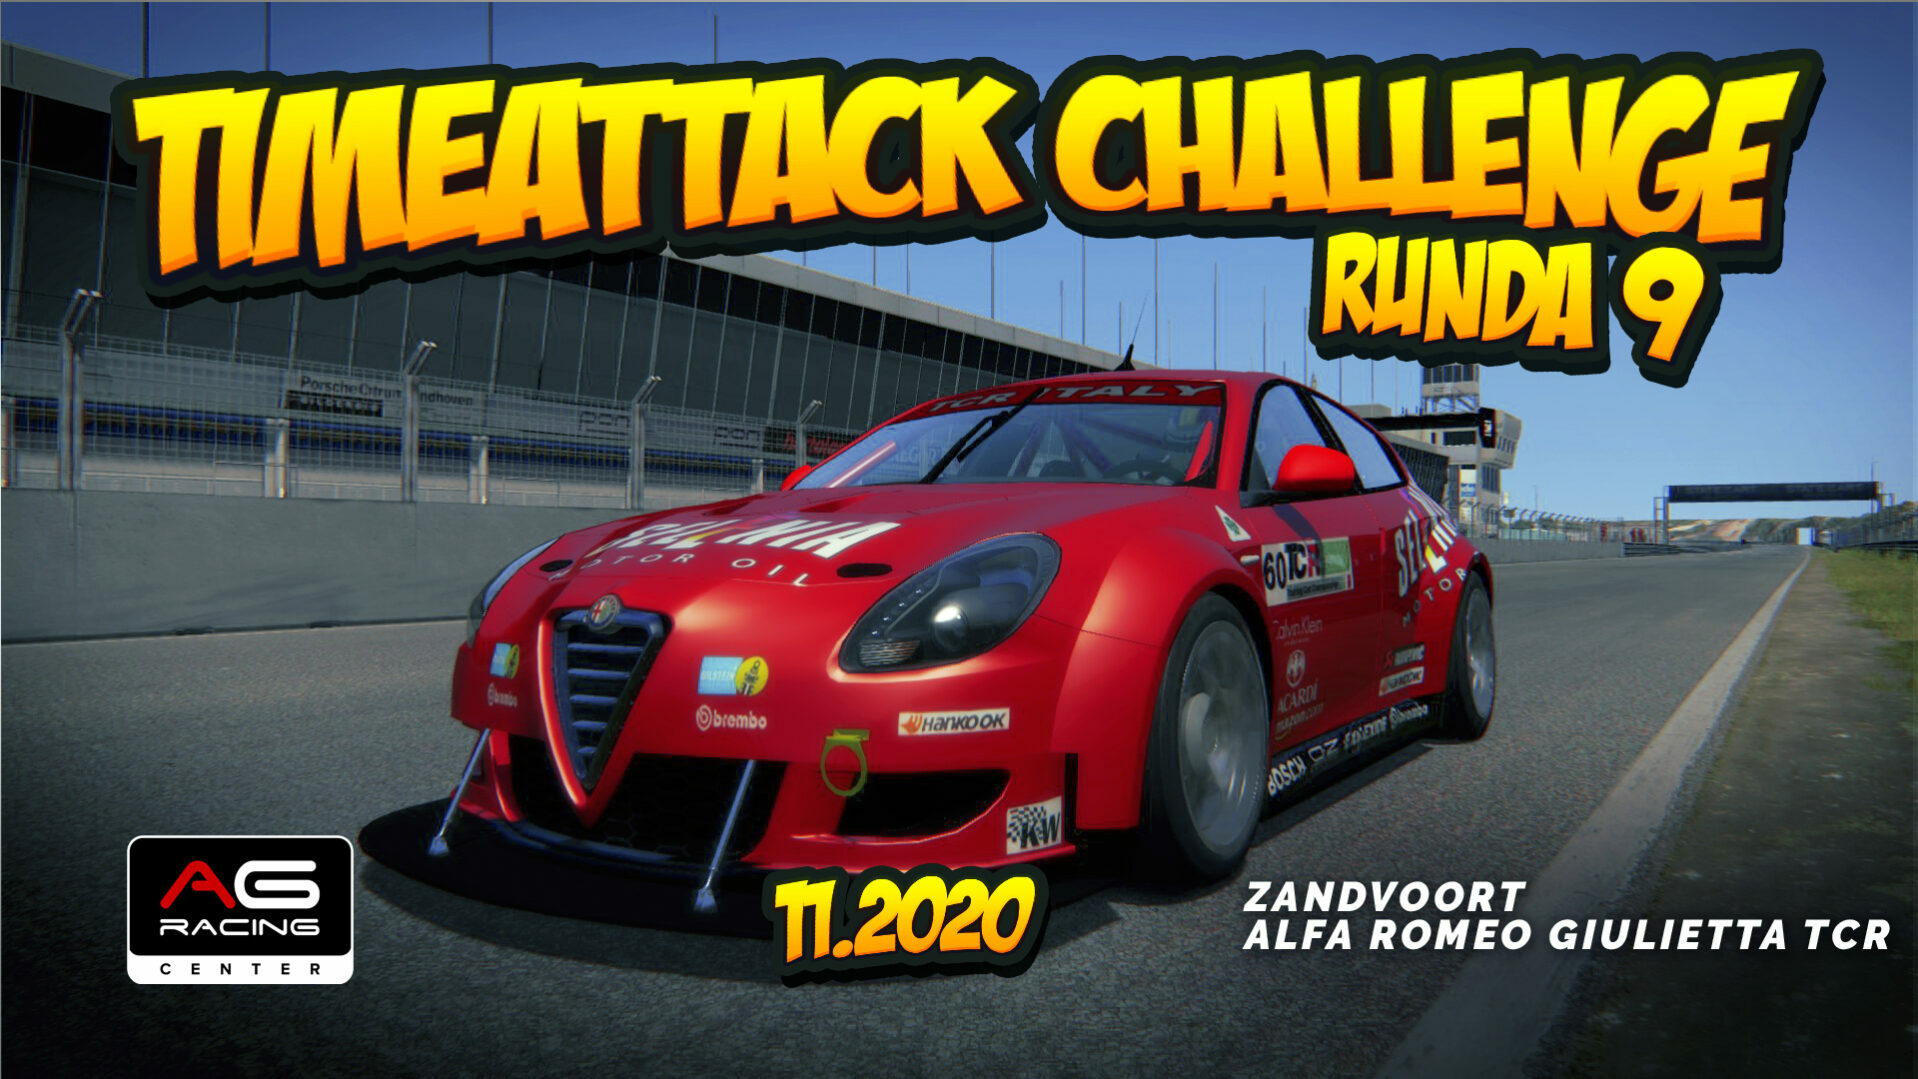 TimeAttack Challenge 2020 Runda 9